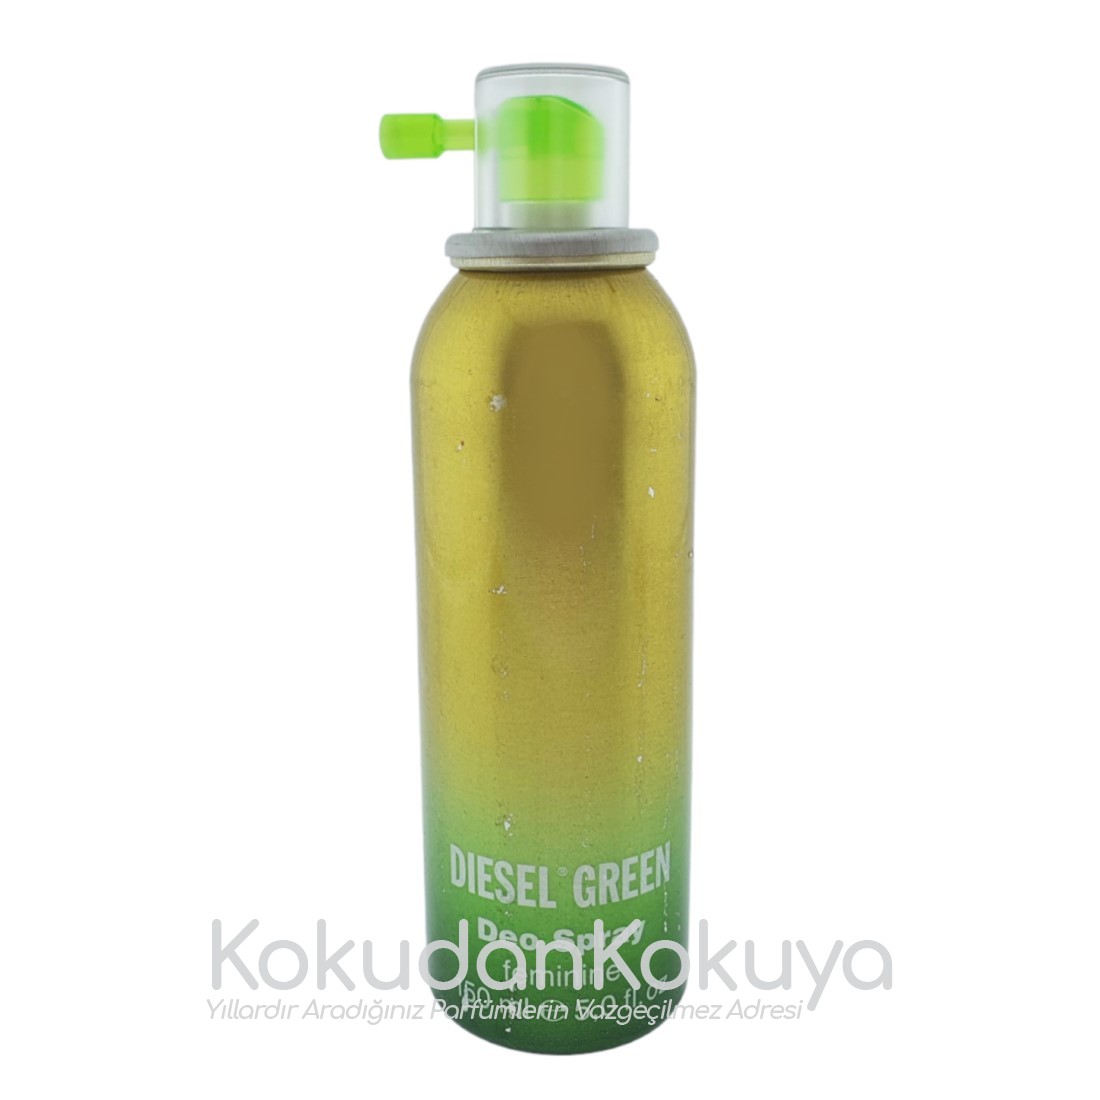 DIESEL Green Feminine (Vintage) Deodorant Kadın 150ml Deodorant Spray (Metal) 